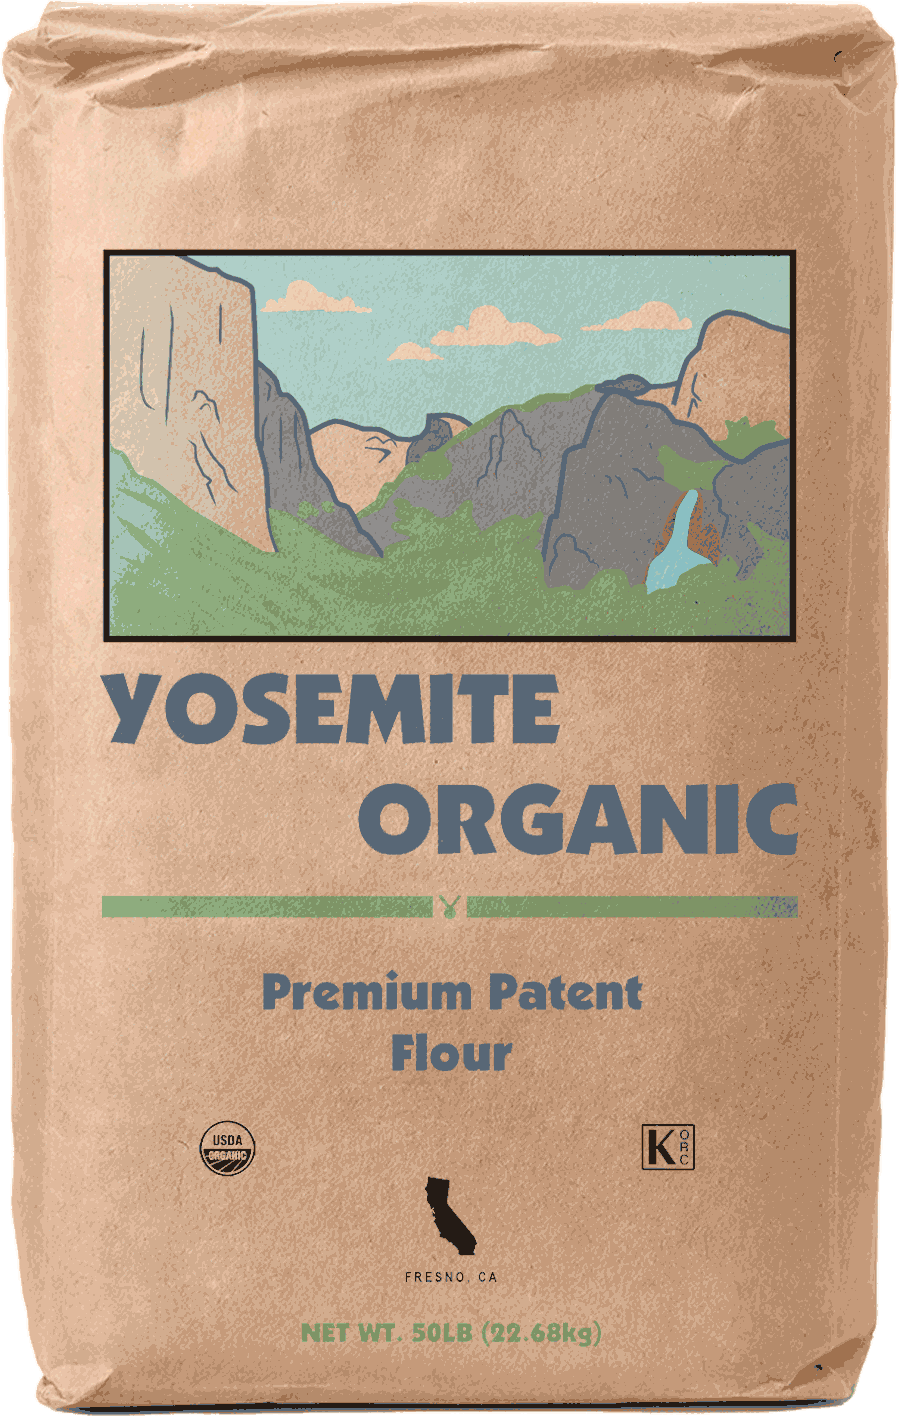 Yosemite Organics flour